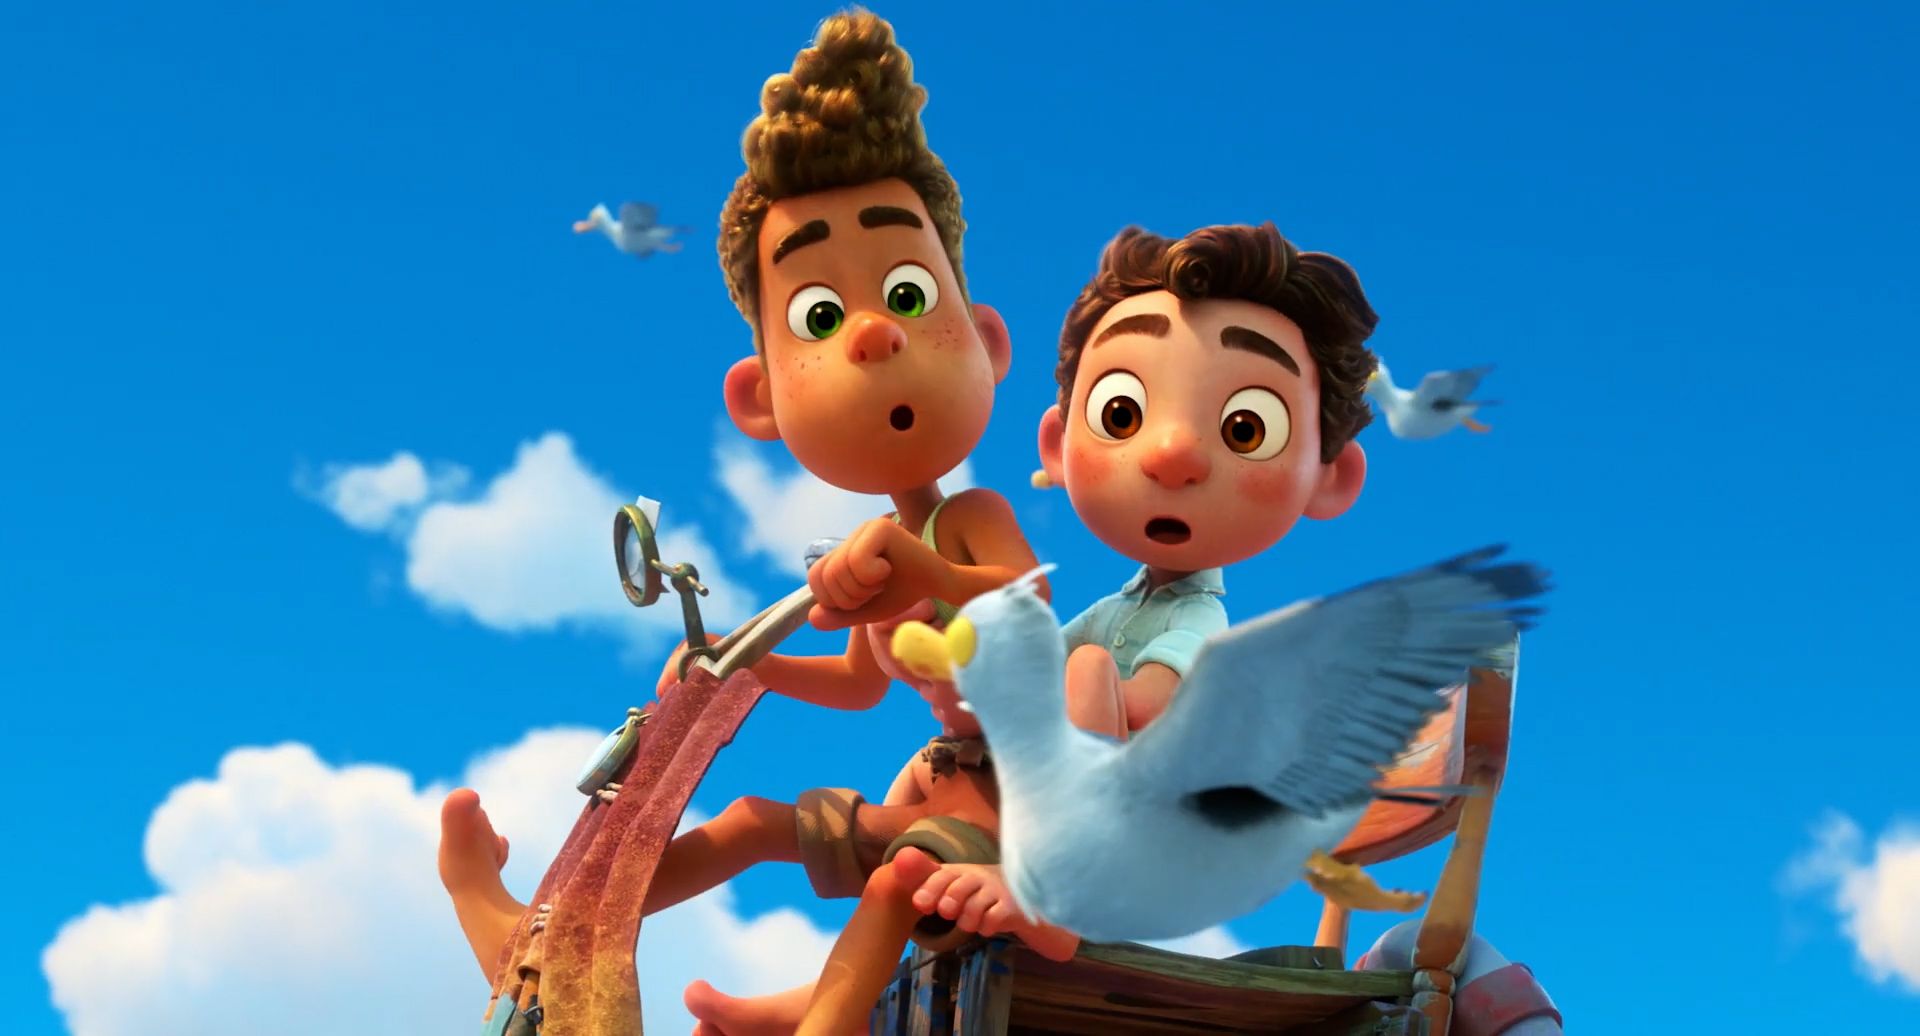 Alberto and Luca in the Pixar Movie Luca